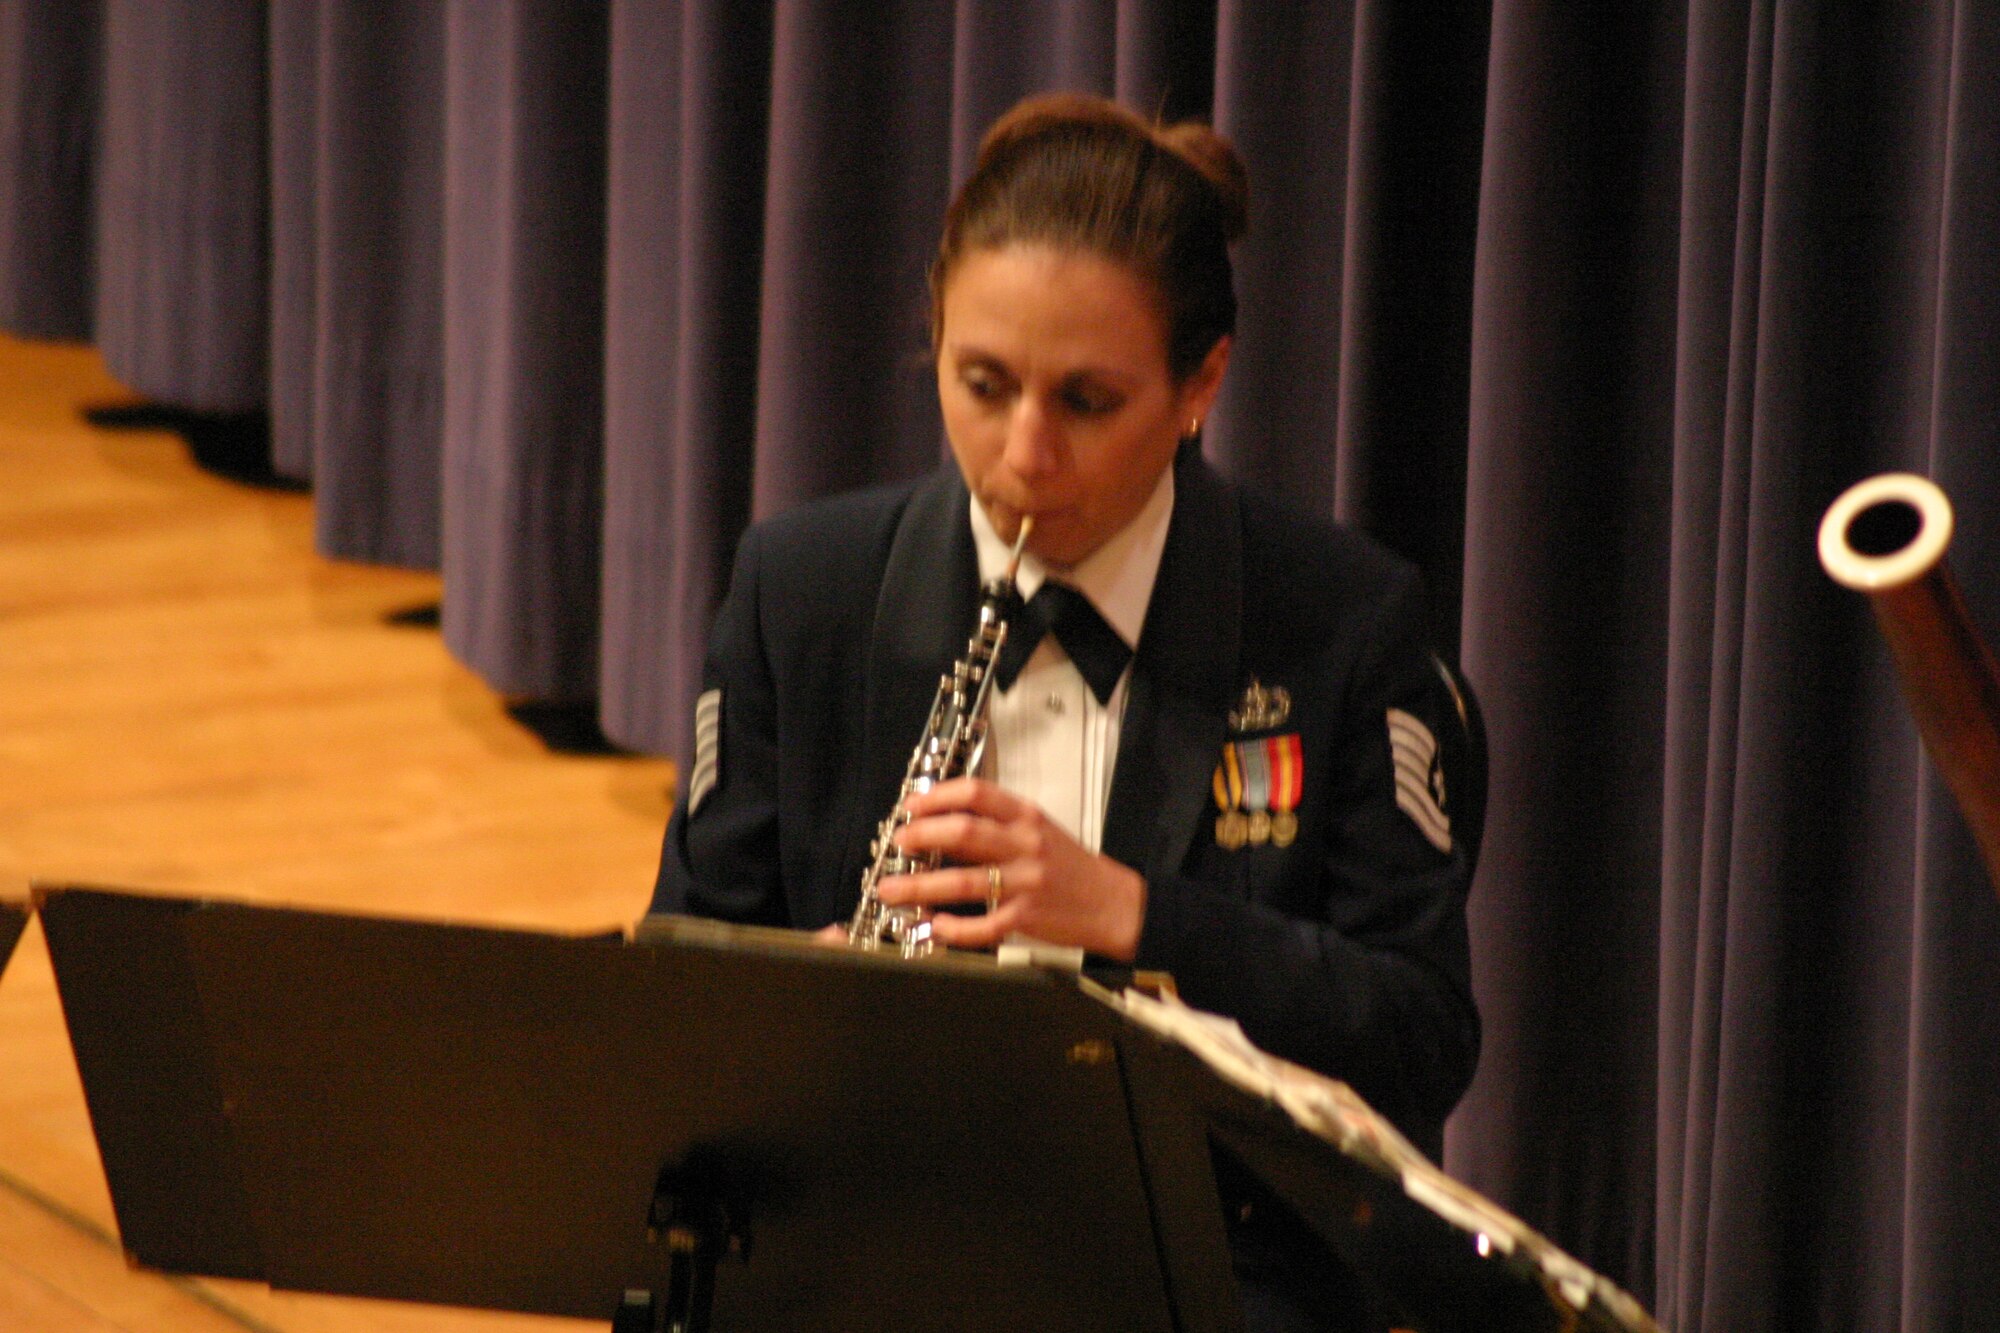 Technical Sergeant Sarah Balian, oboist for the USAF Academy Band